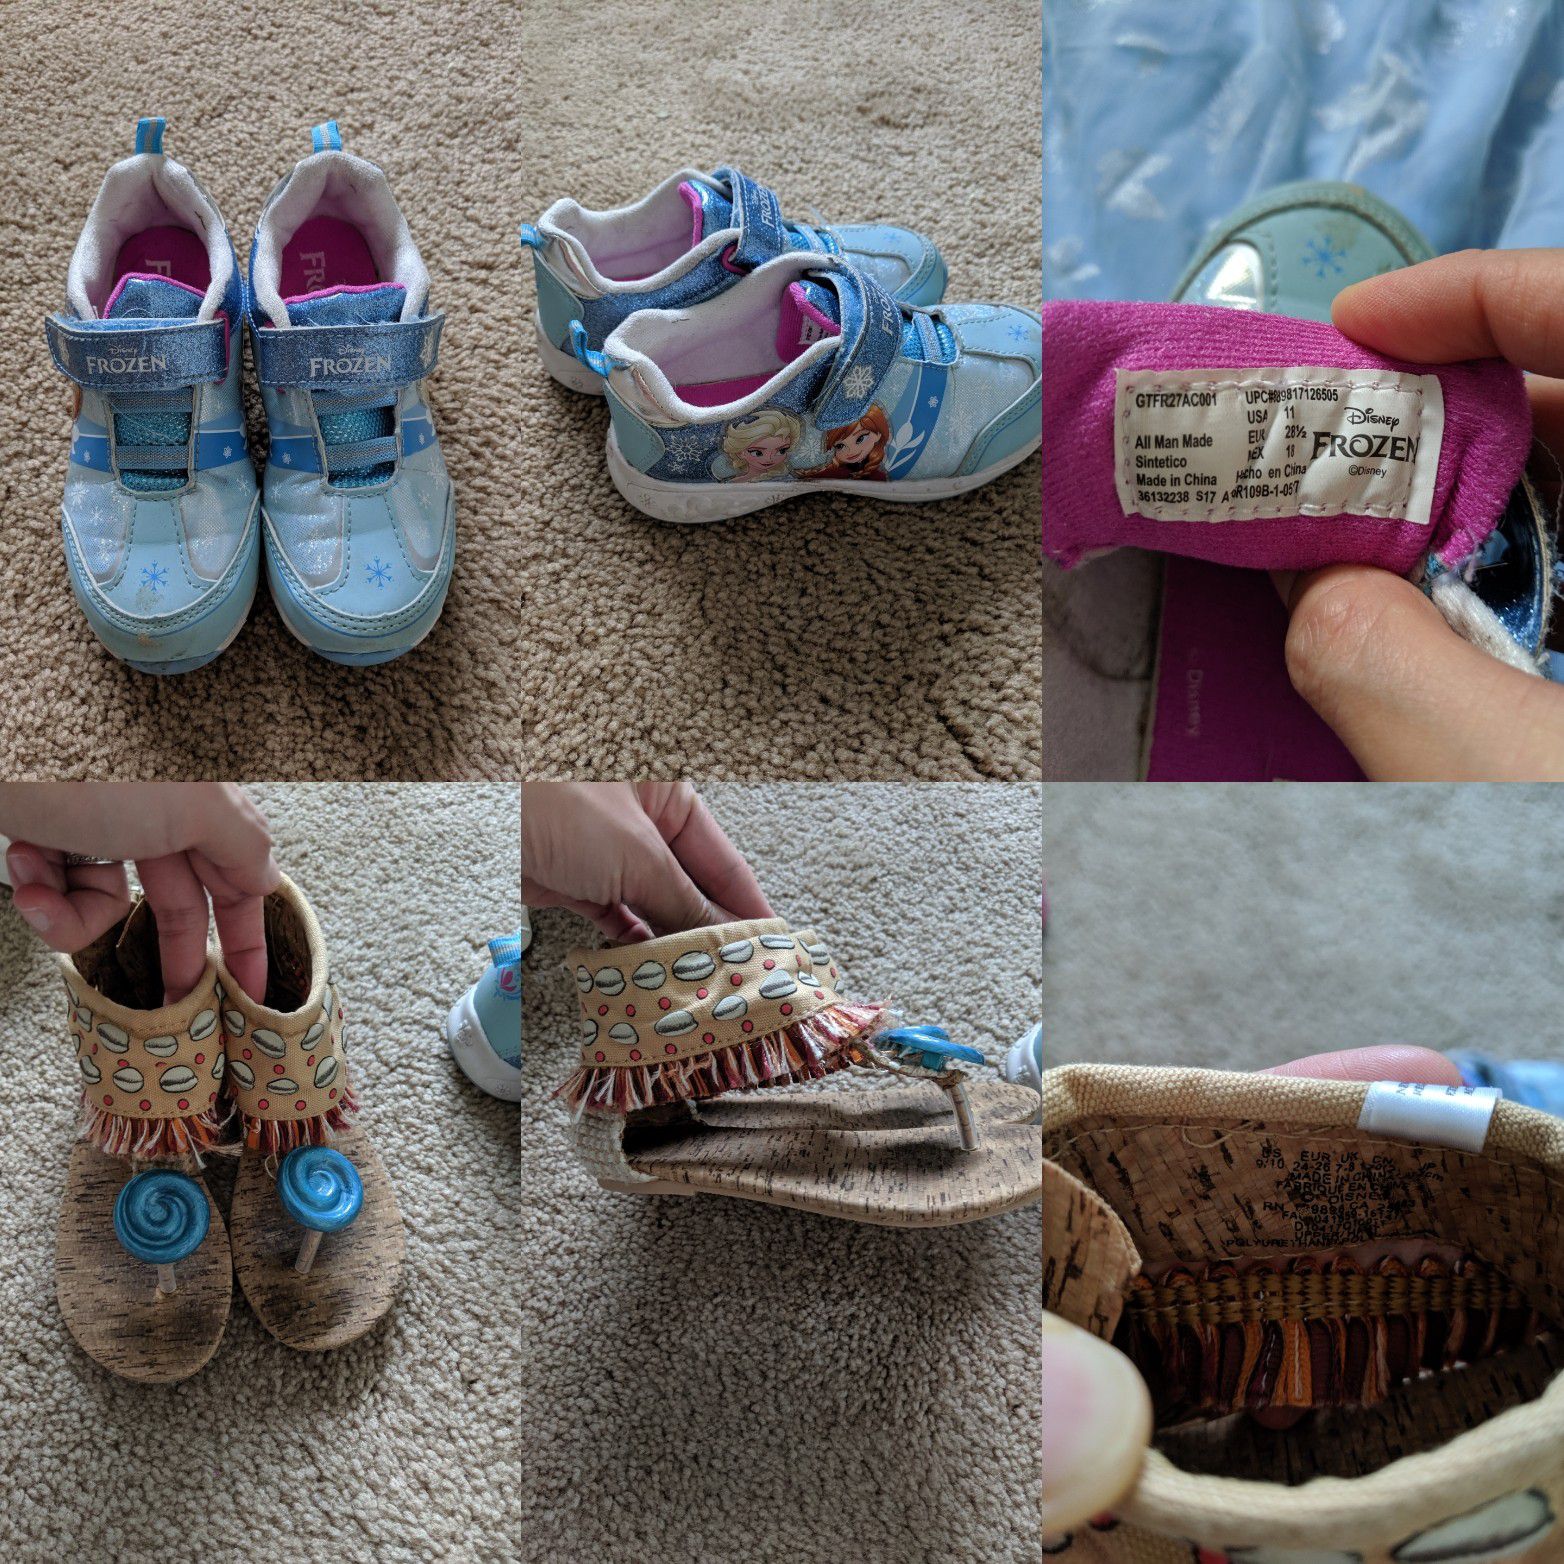 Princess/frozen Disney clothes and shoes